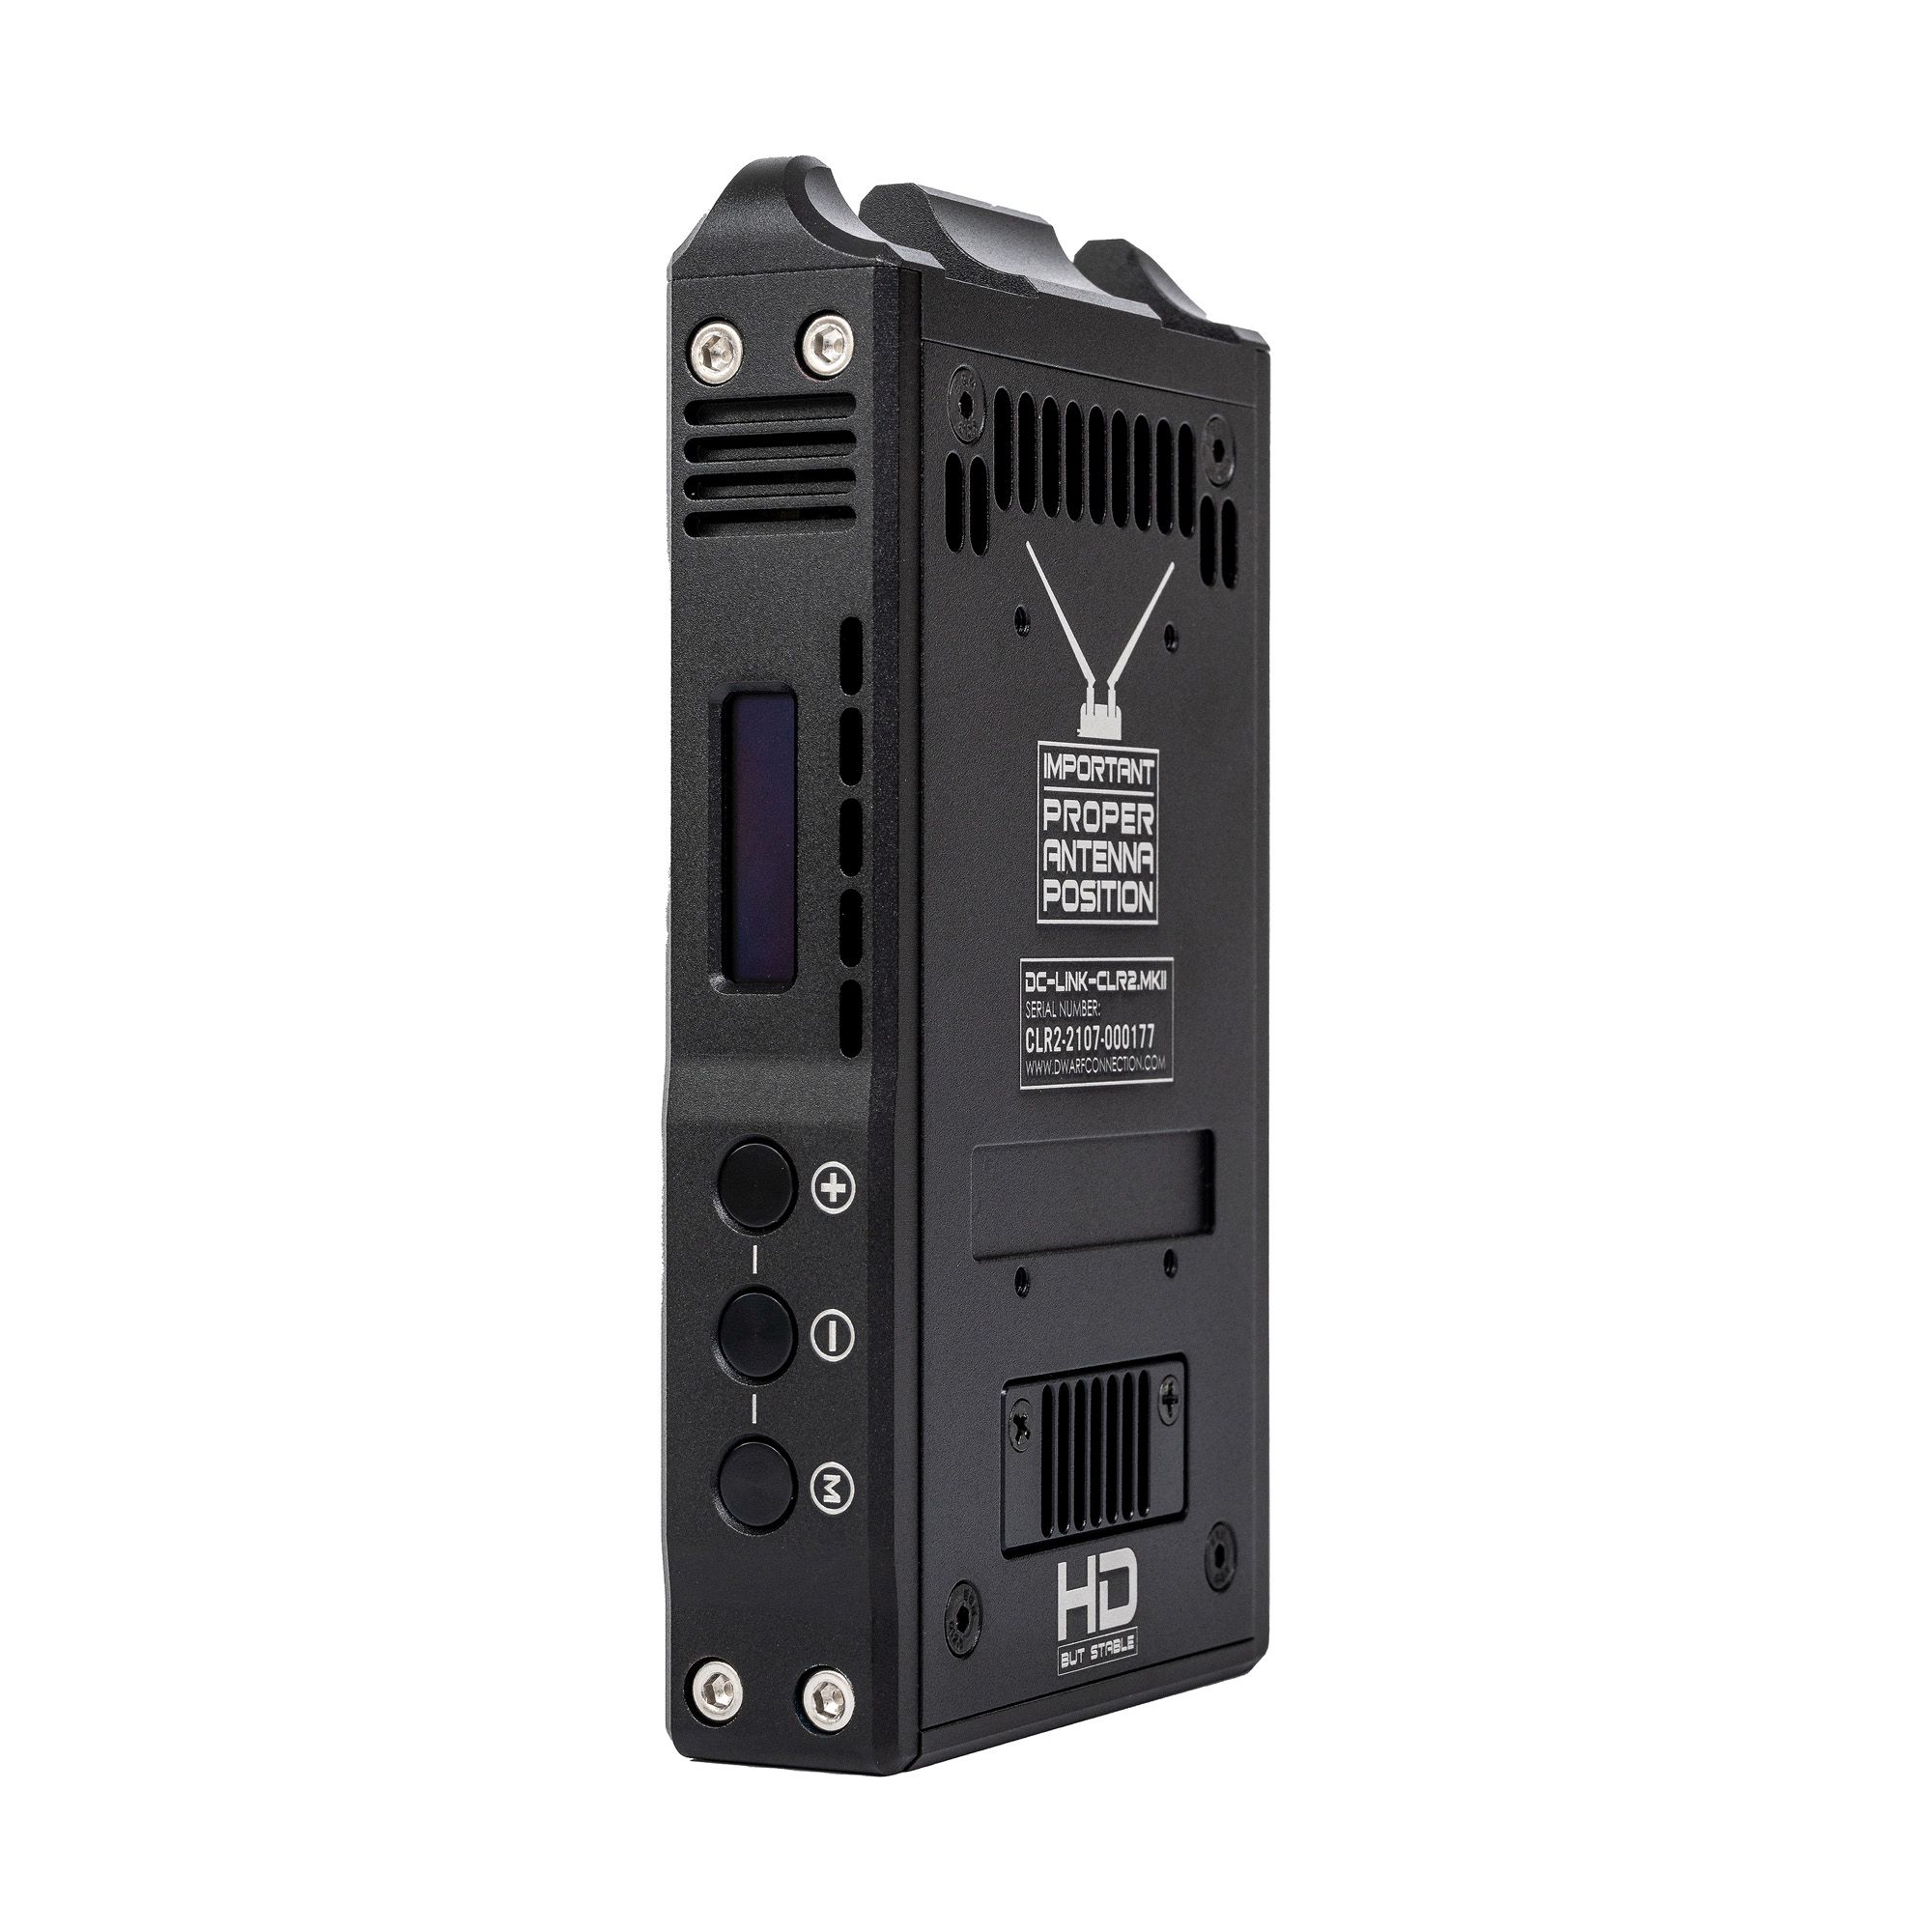 Dwarf Connection CLR2.MKII - TX/RX 300m LOS, NON-DFS, 3G-SDI/HDMI, indoor use only